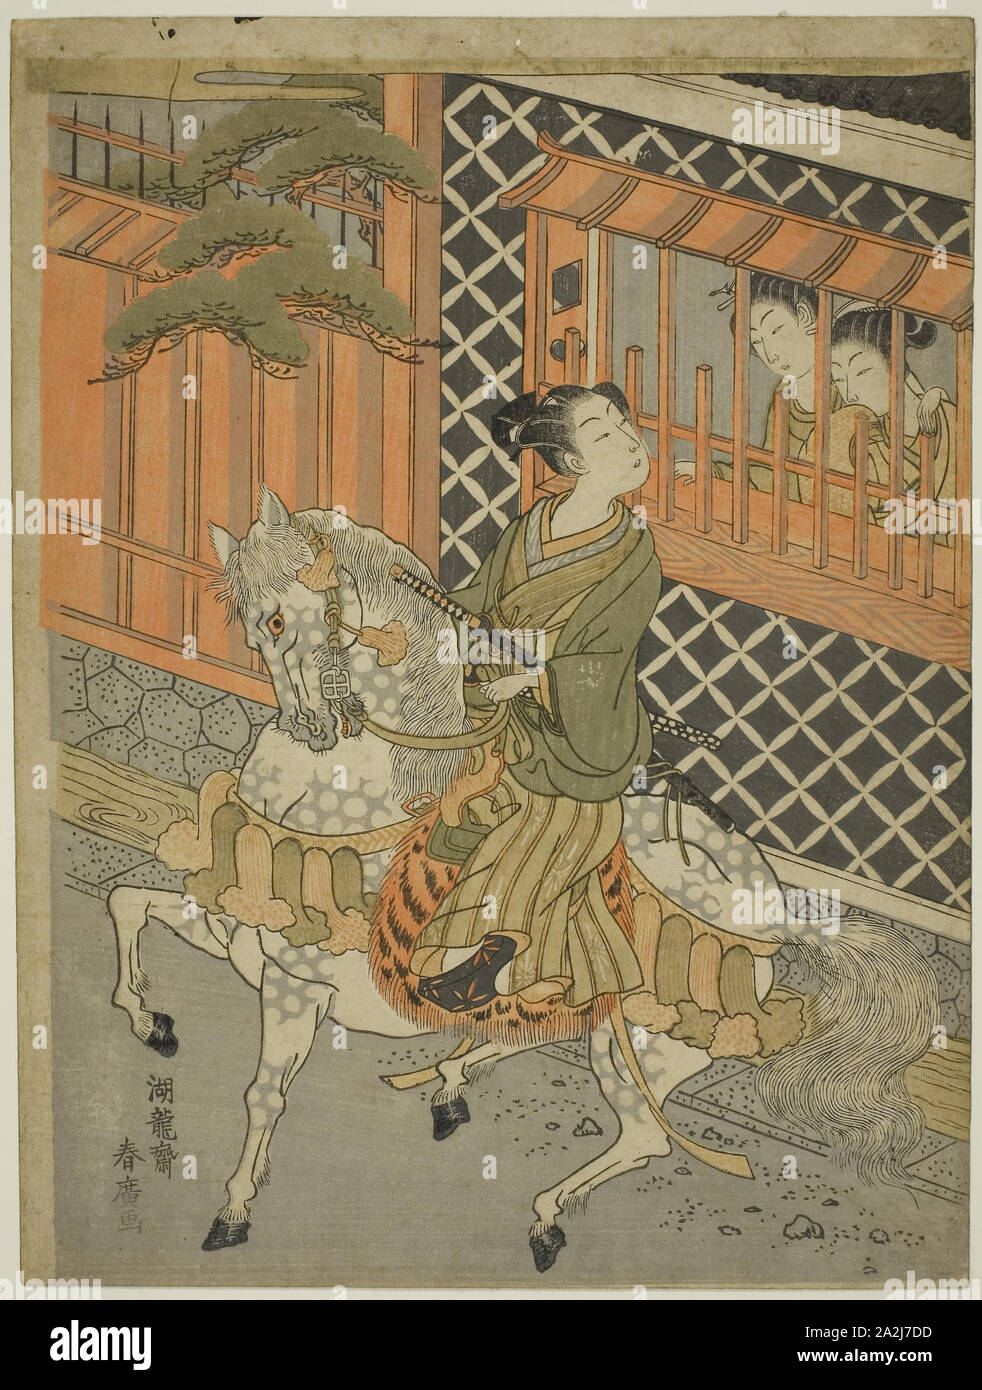 Junge Samurai auf dem Pferd, C. 1769/70, Isoda Koryusai, Japanisch, 1735-1790, Japan, Farbe holzschnitt, chuban, 11 3/8 x 8 1/4 Zoll Stockfoto